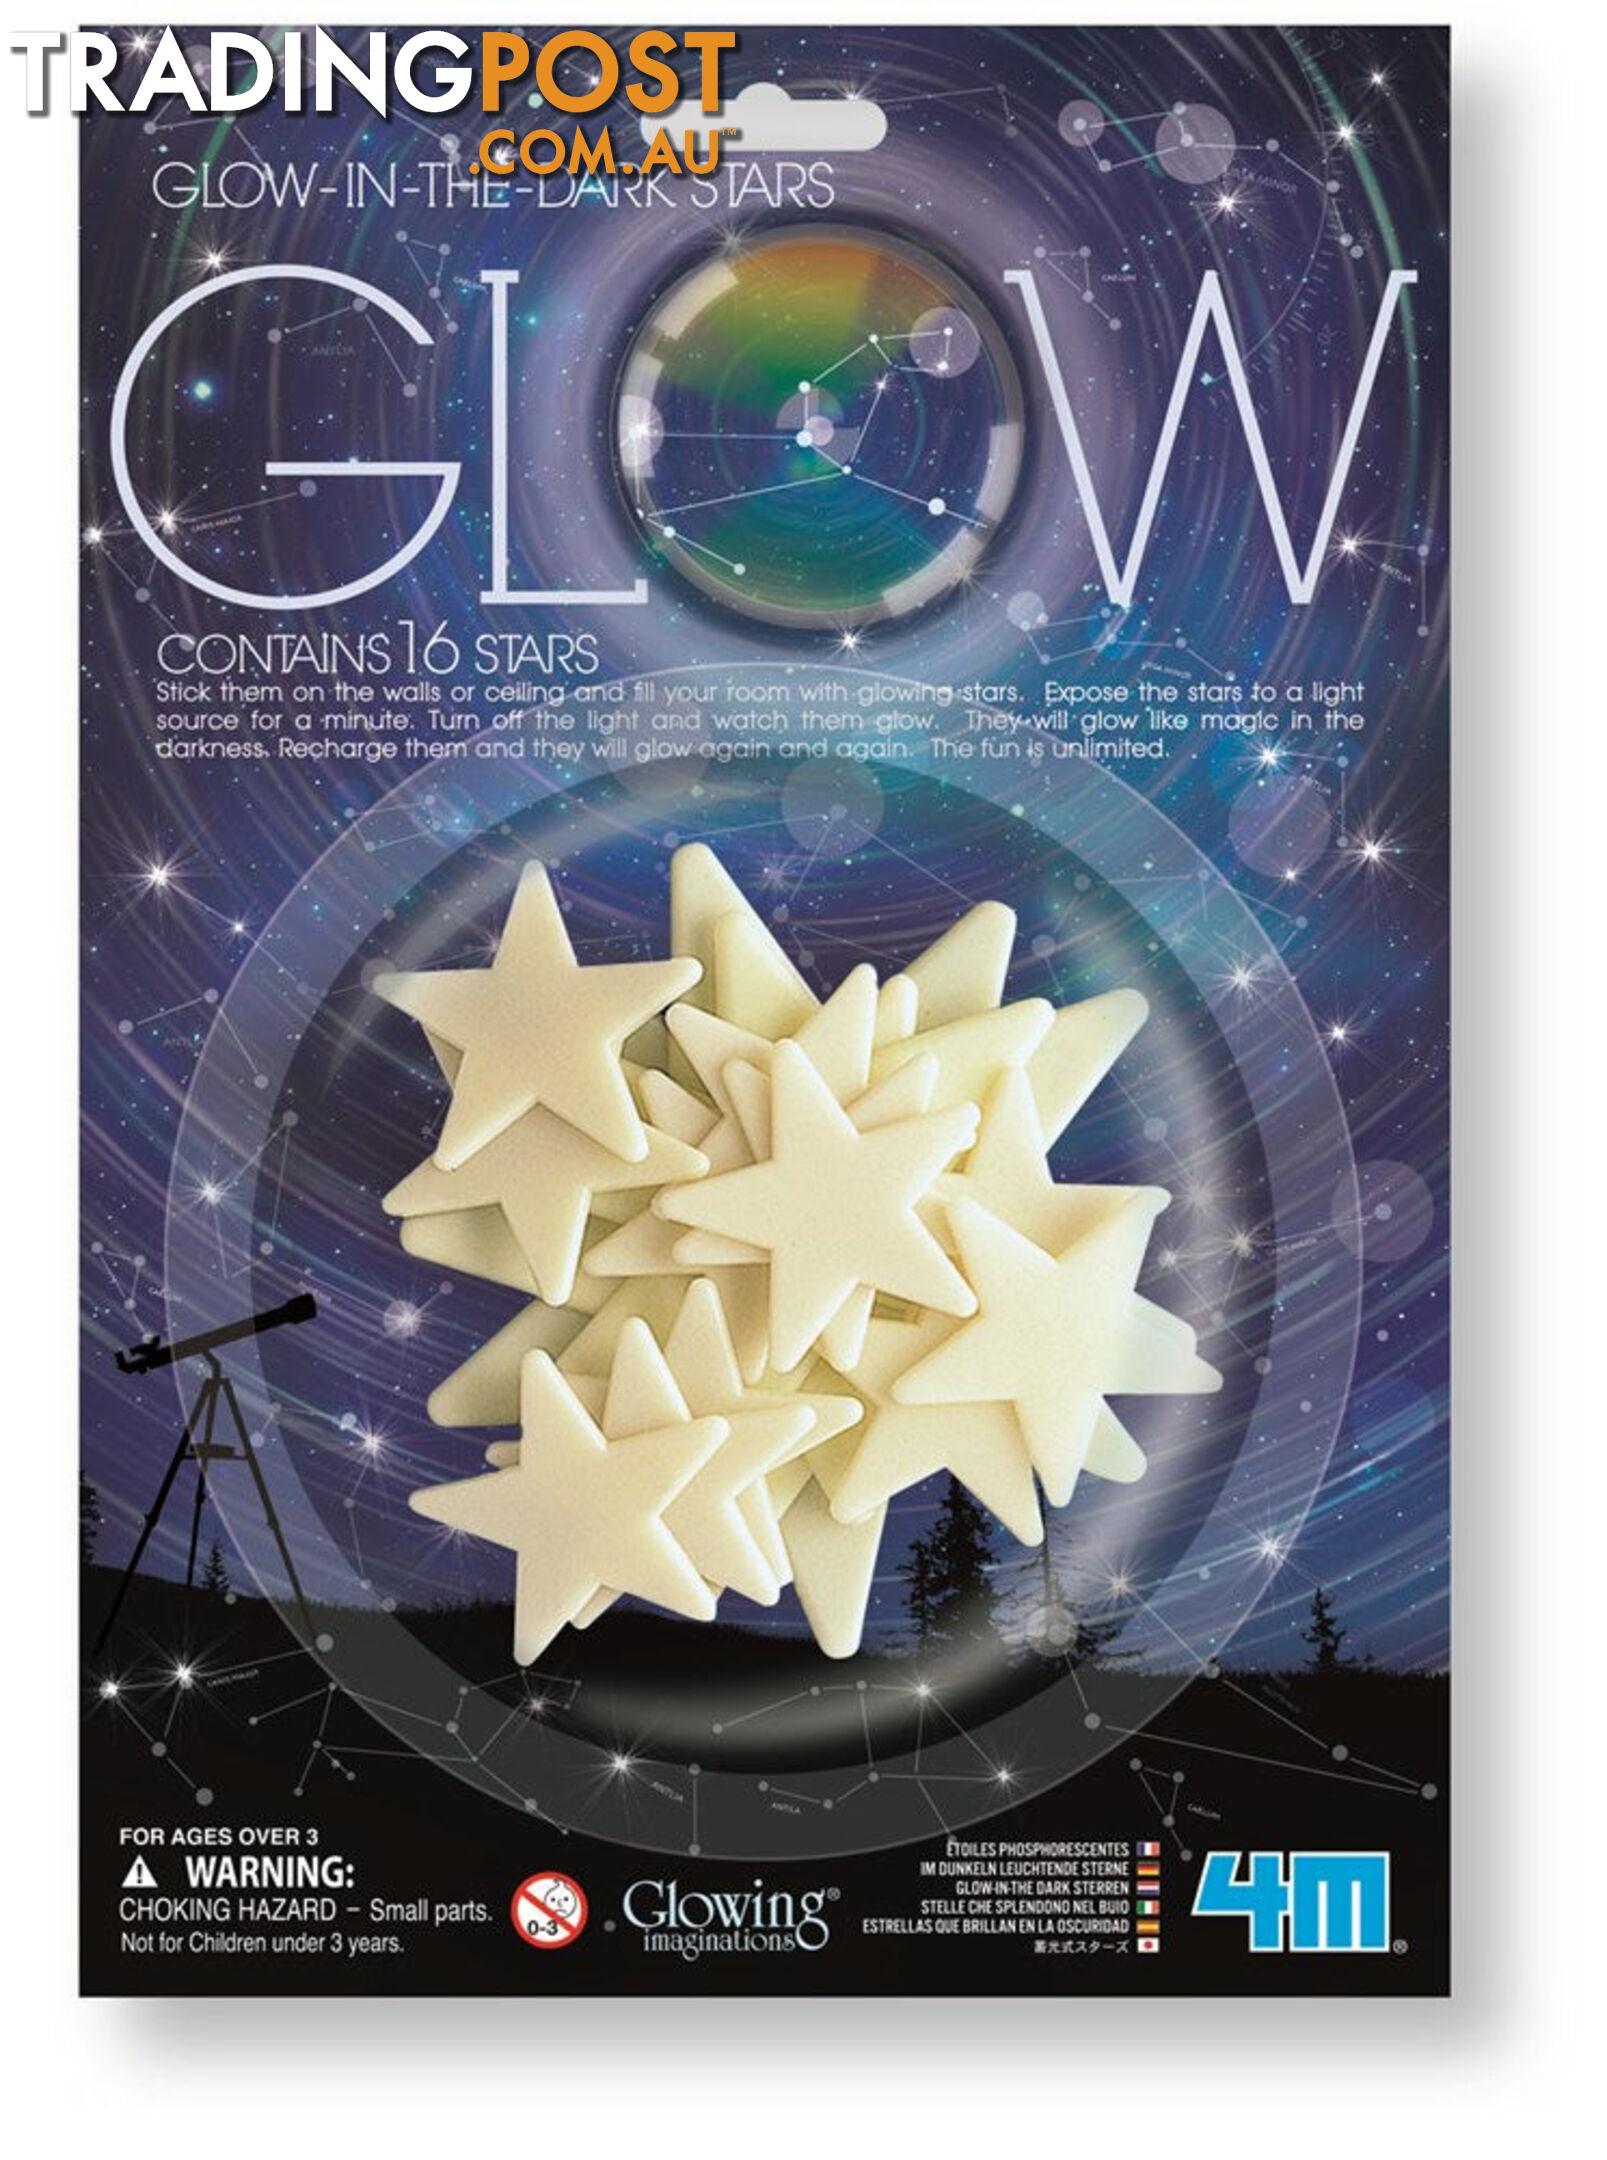 4m - Glow Stars Jpg5210 - 4893156052100